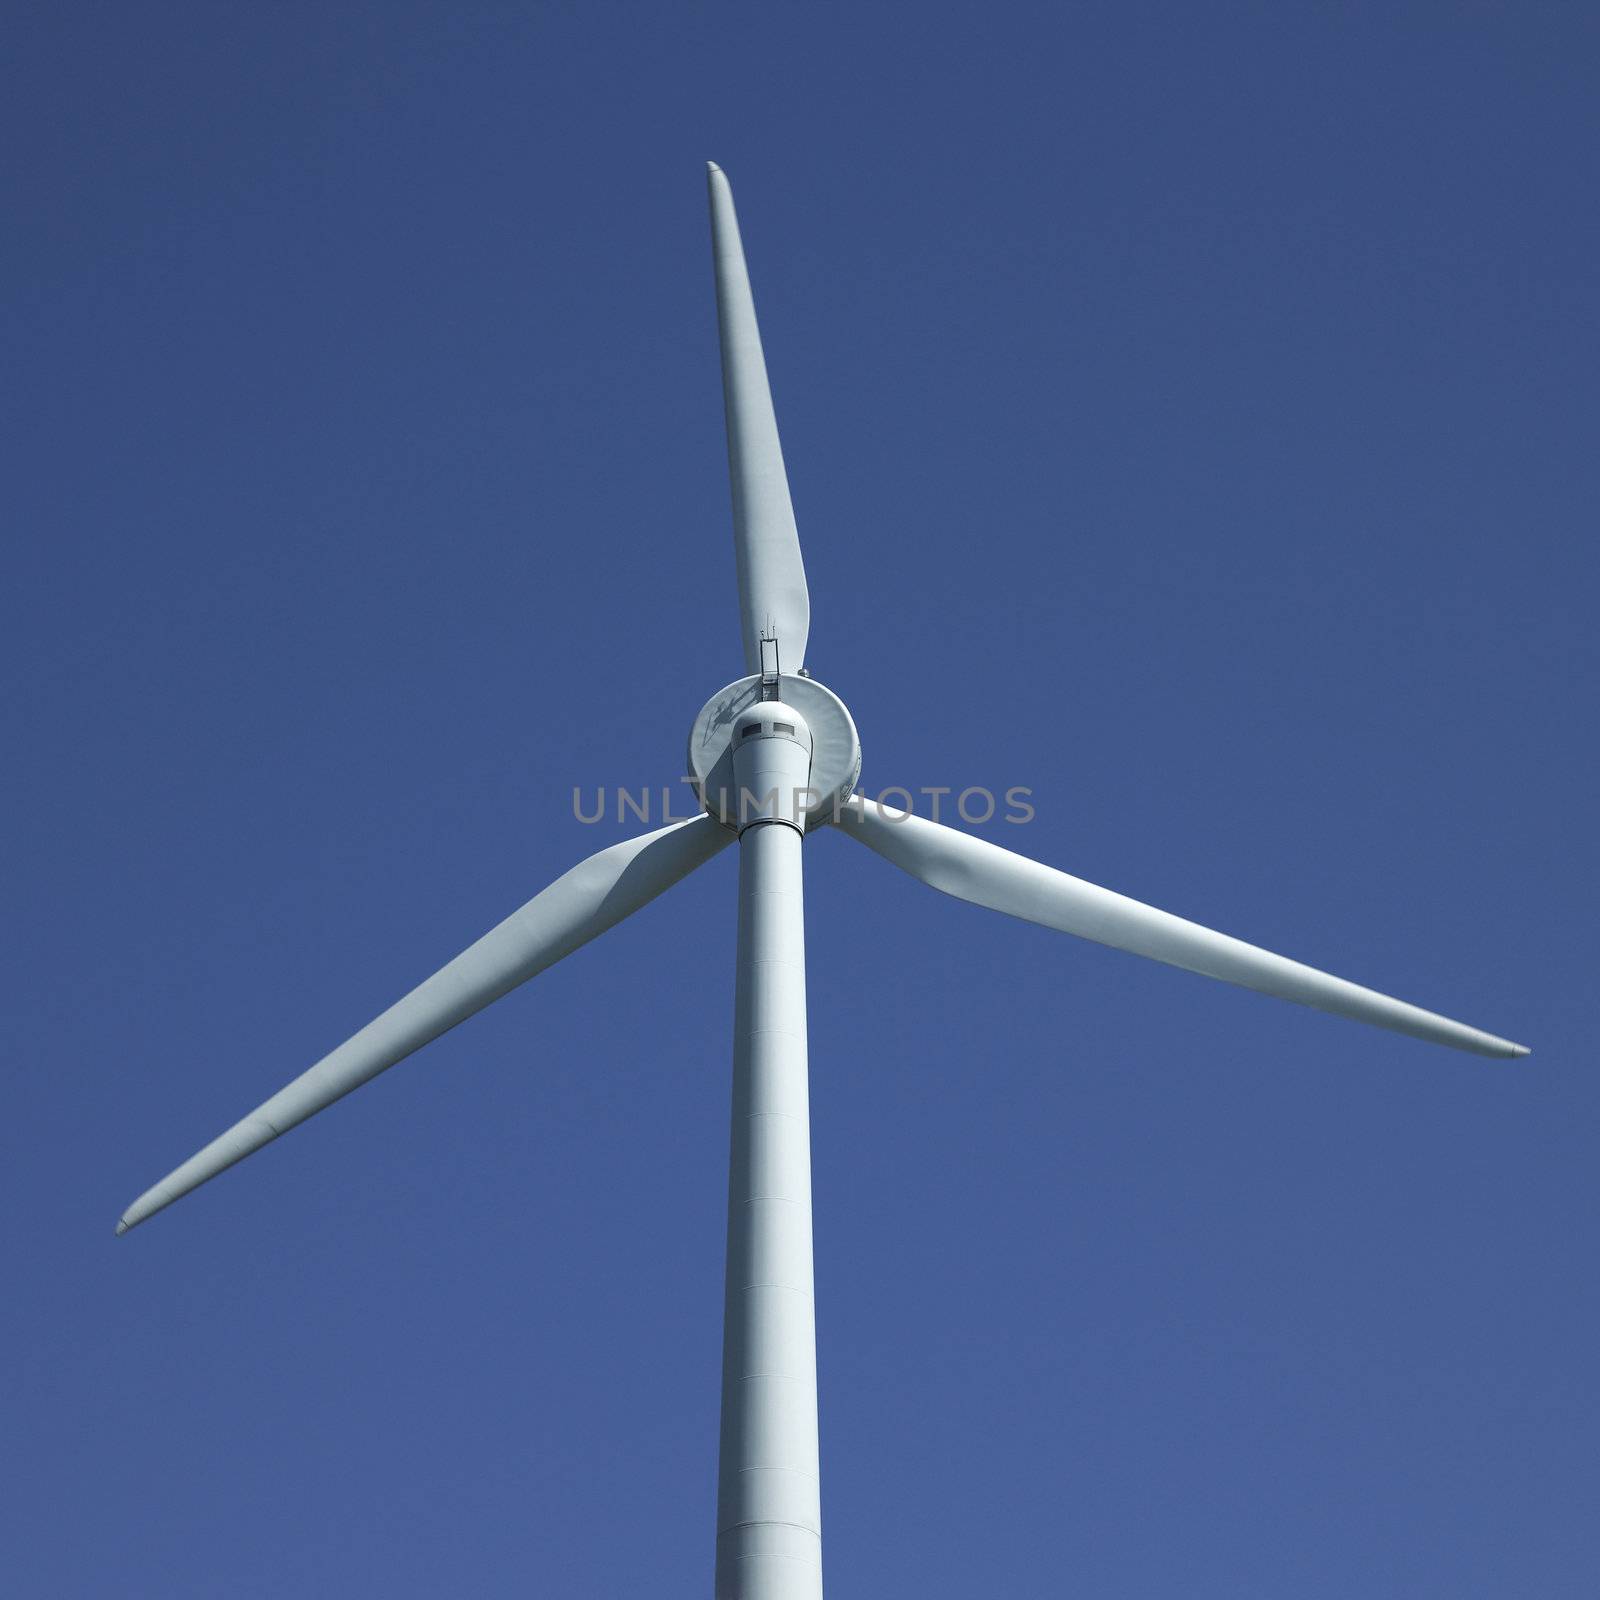 Wind turbine by mmm